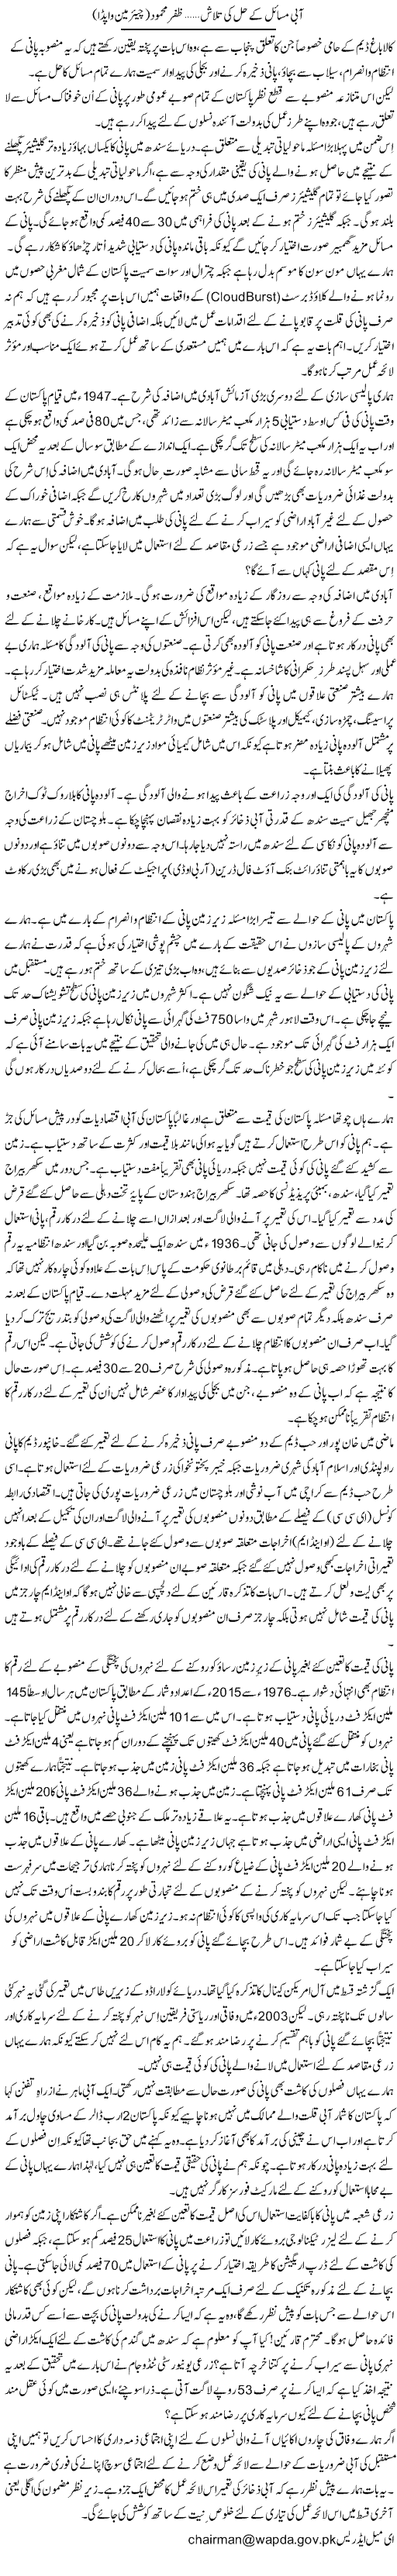 Aabi Masail Ke Hal Ki Talash | Zafar Mahmood | Daily Urdu Columns